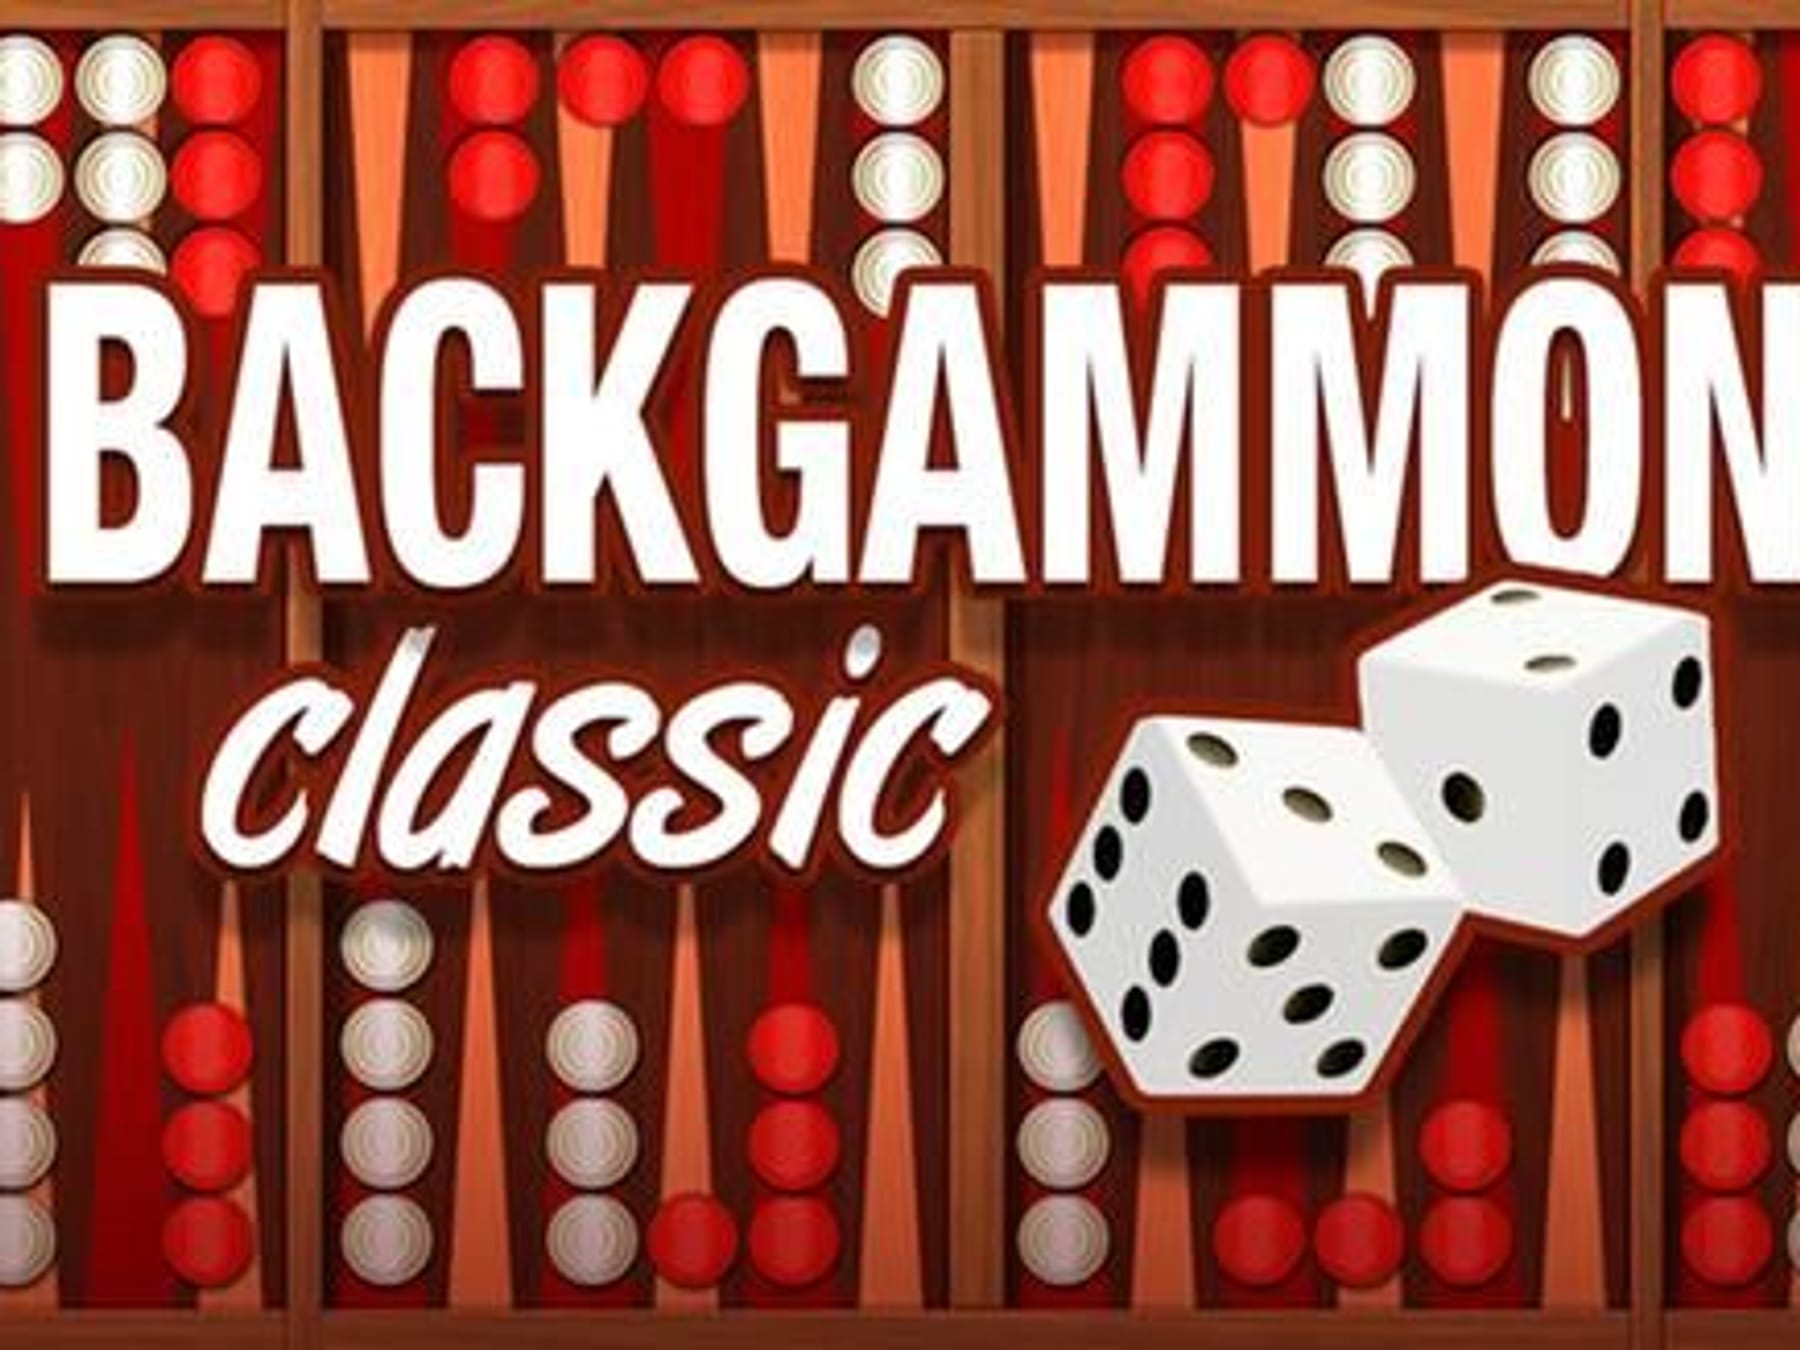 Backgammon Classic kostenlos online spielen bei t-online.de